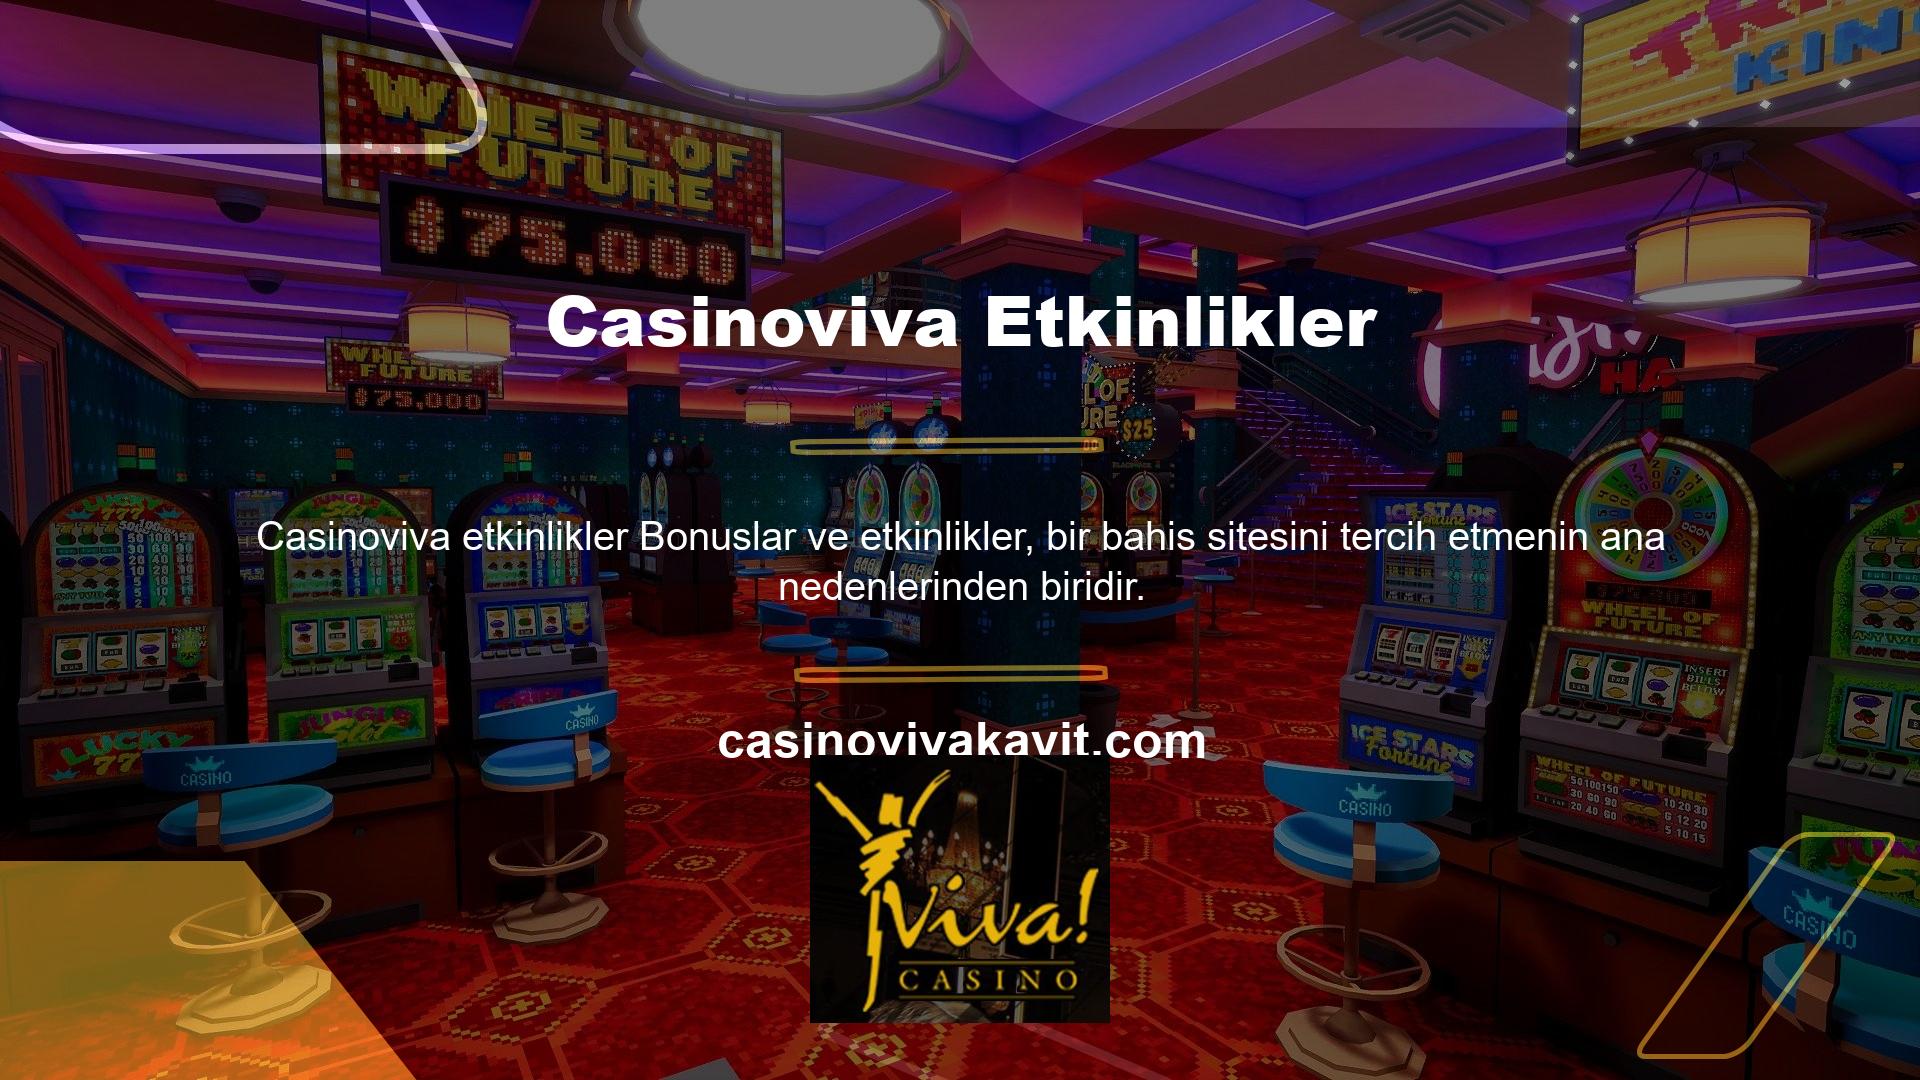 Casinoviva etkinlikler